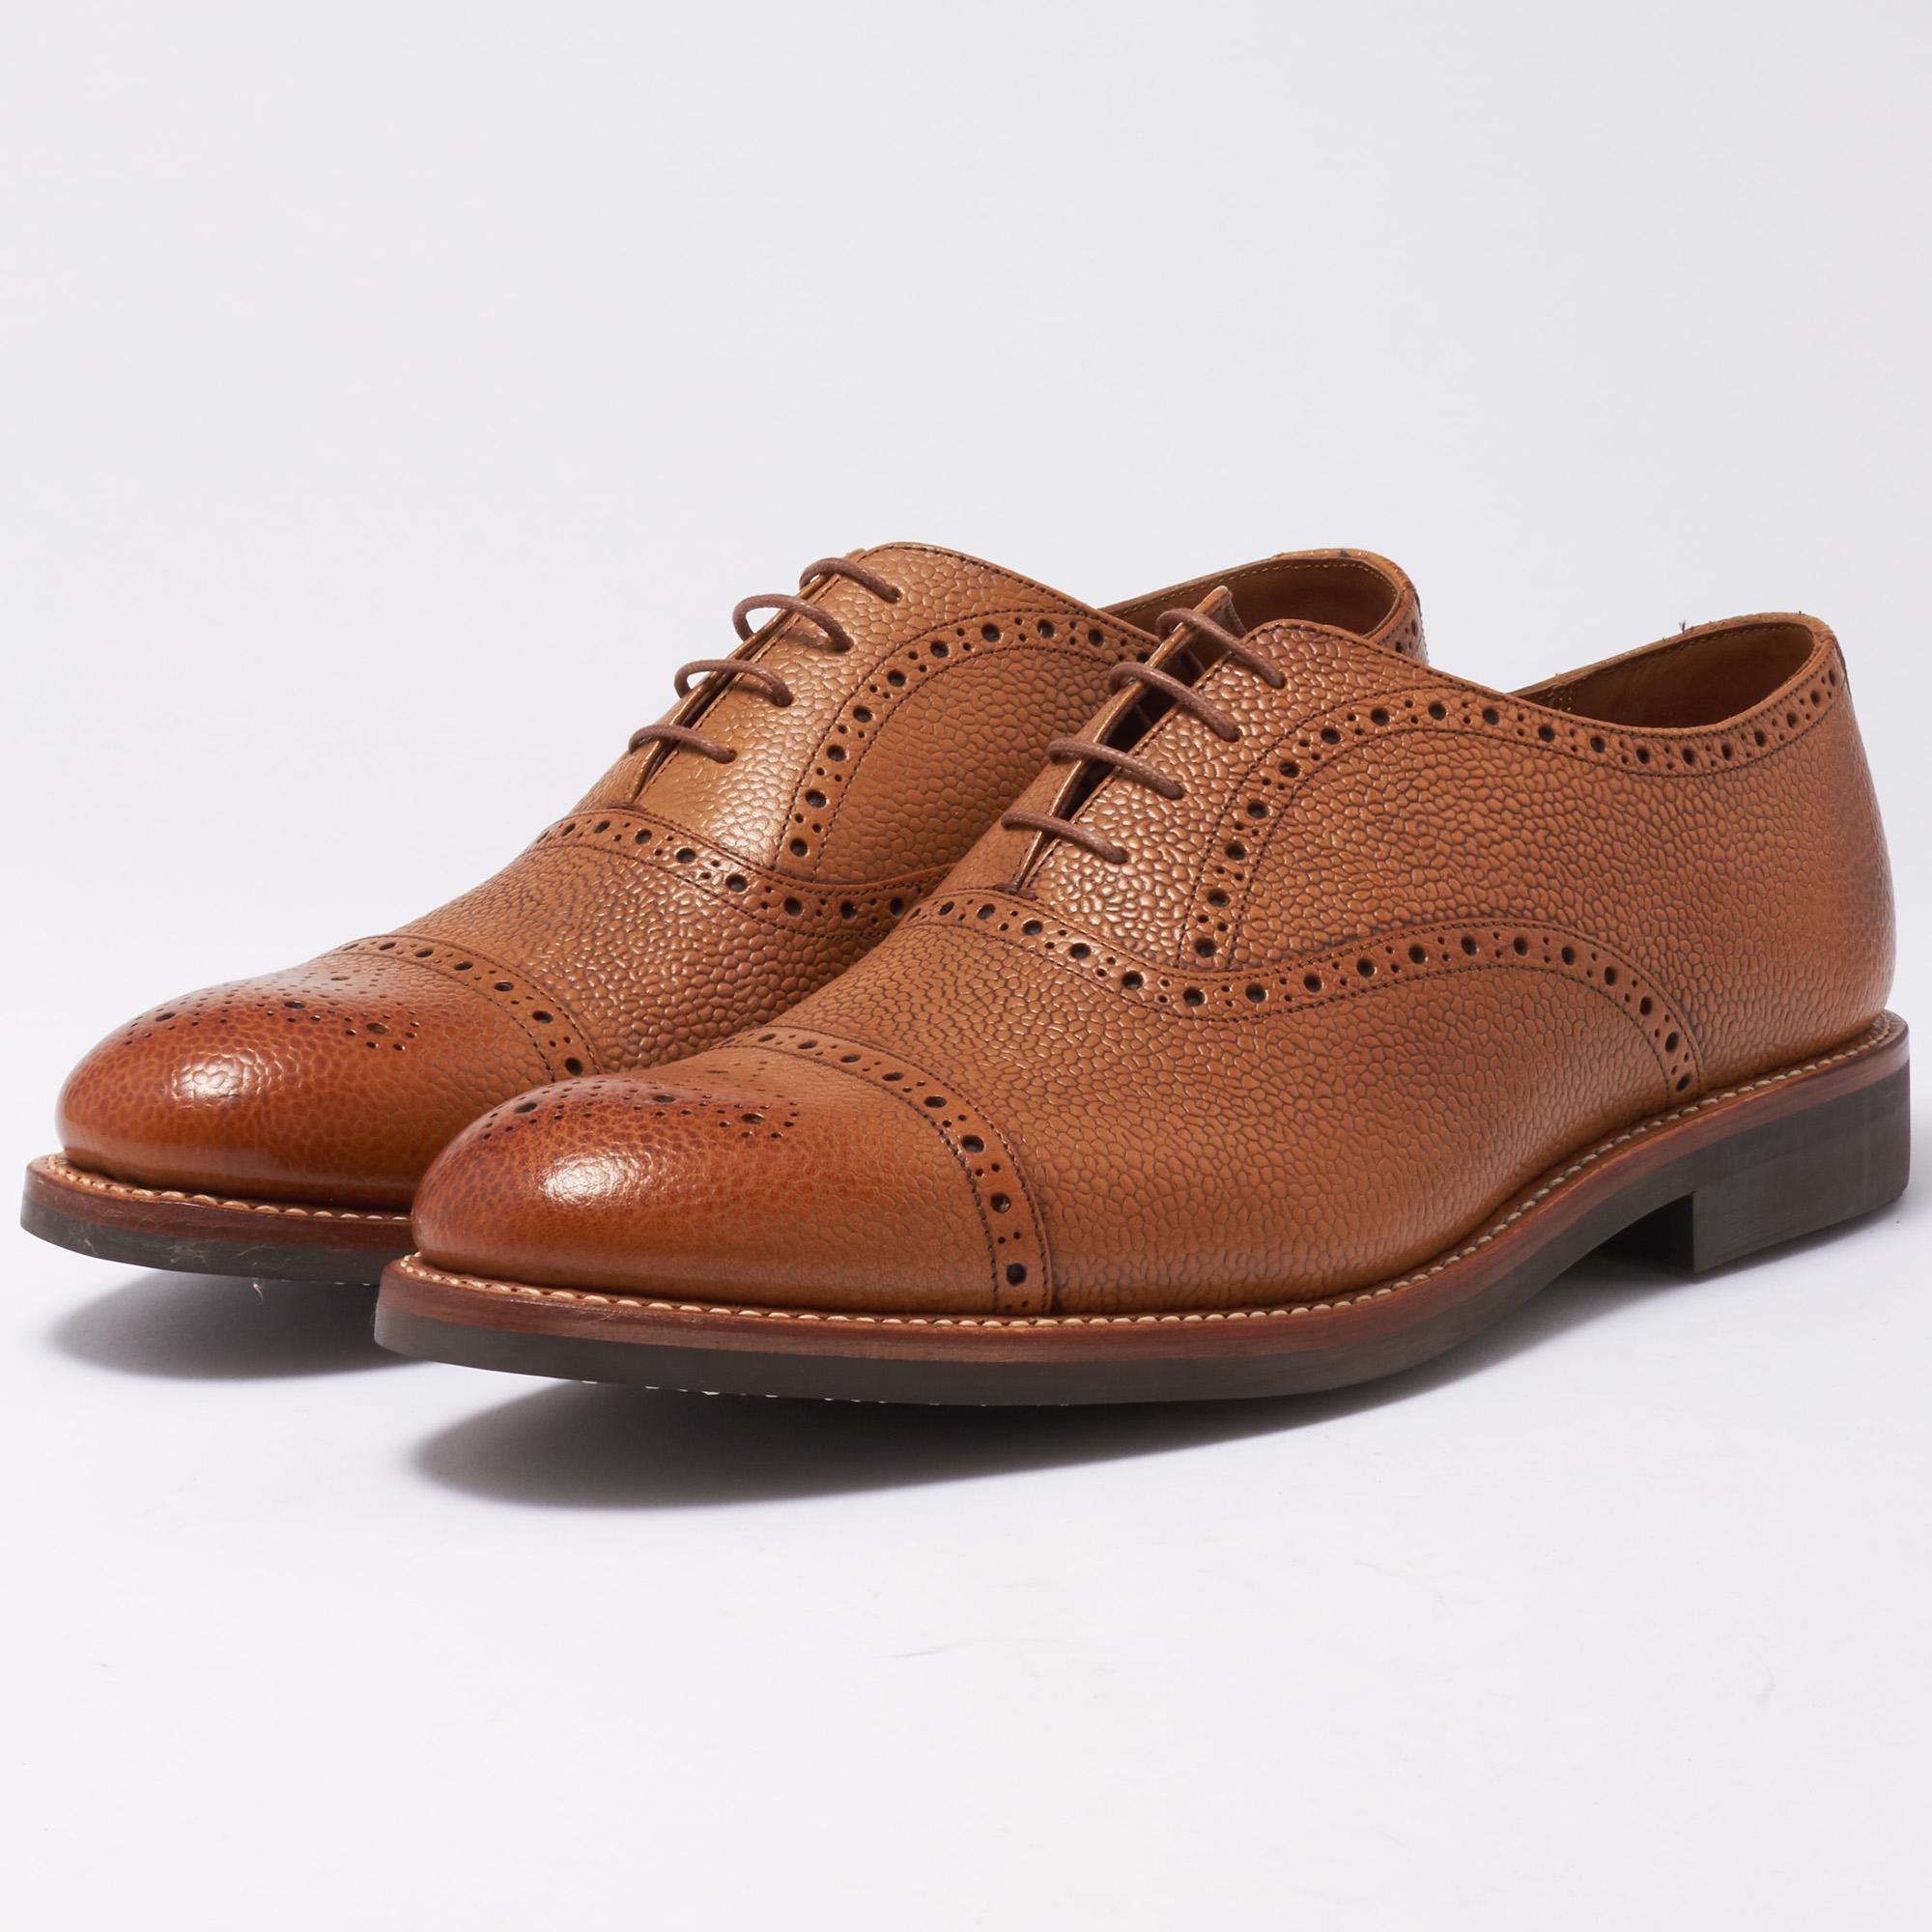 Grenson Leather Matthew Tan Shoes for Men - Lyst